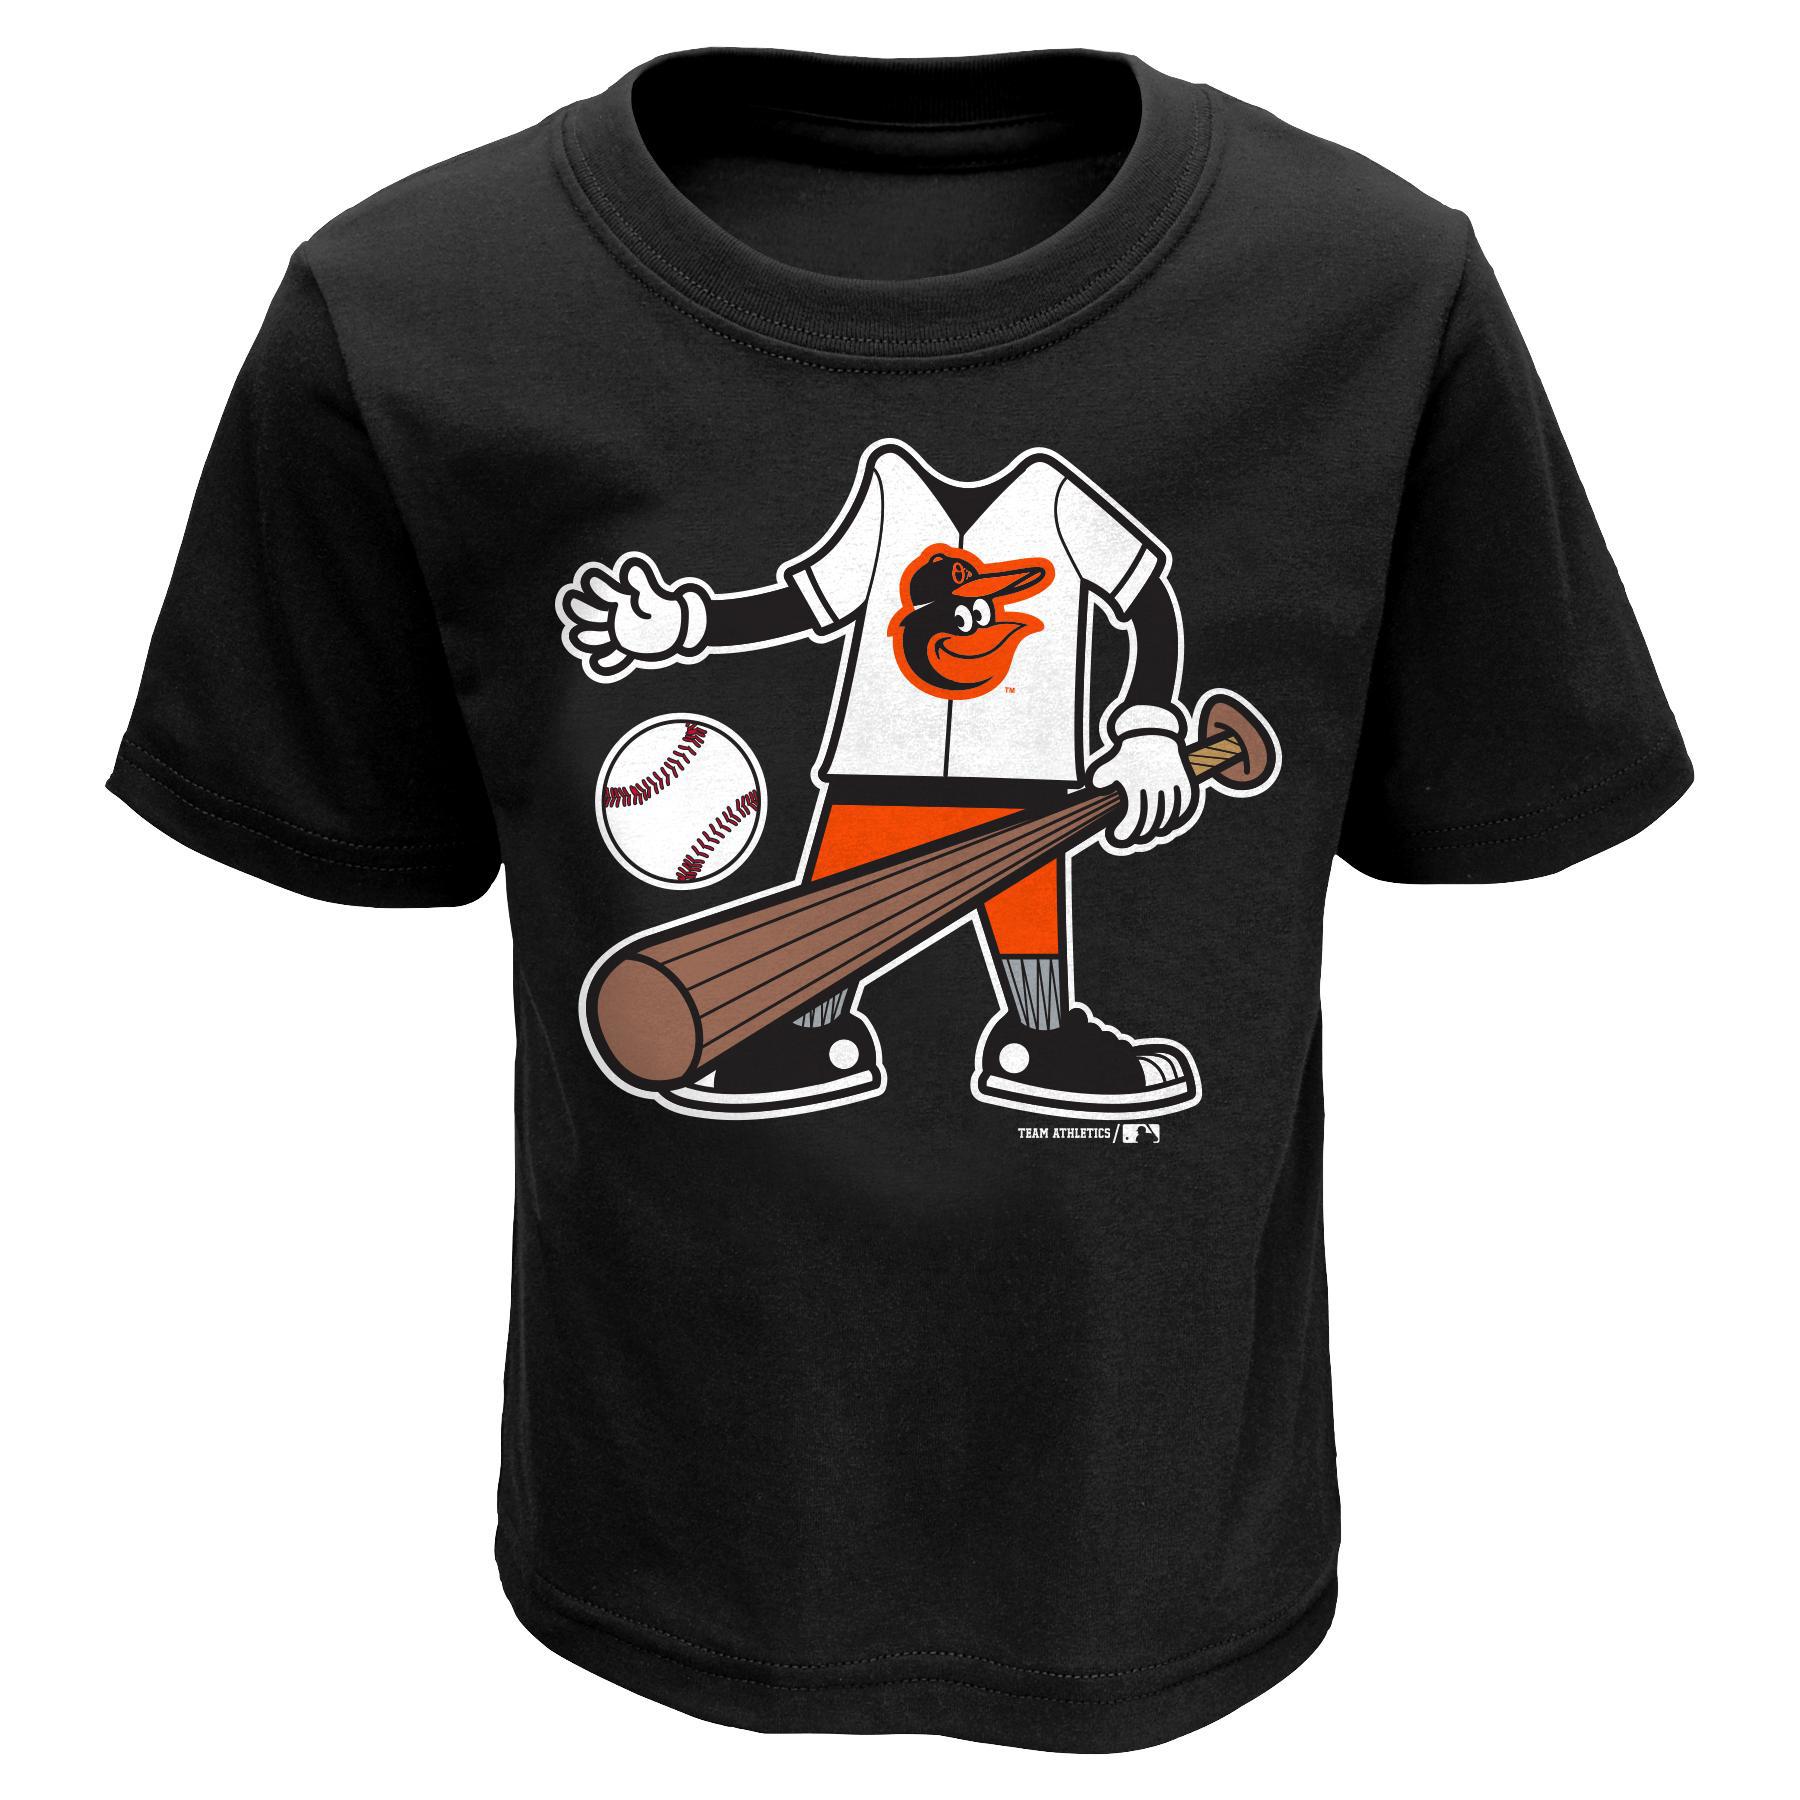 MLB Infant & Toddler Boy's T-Shirt - Baltimore Orioles